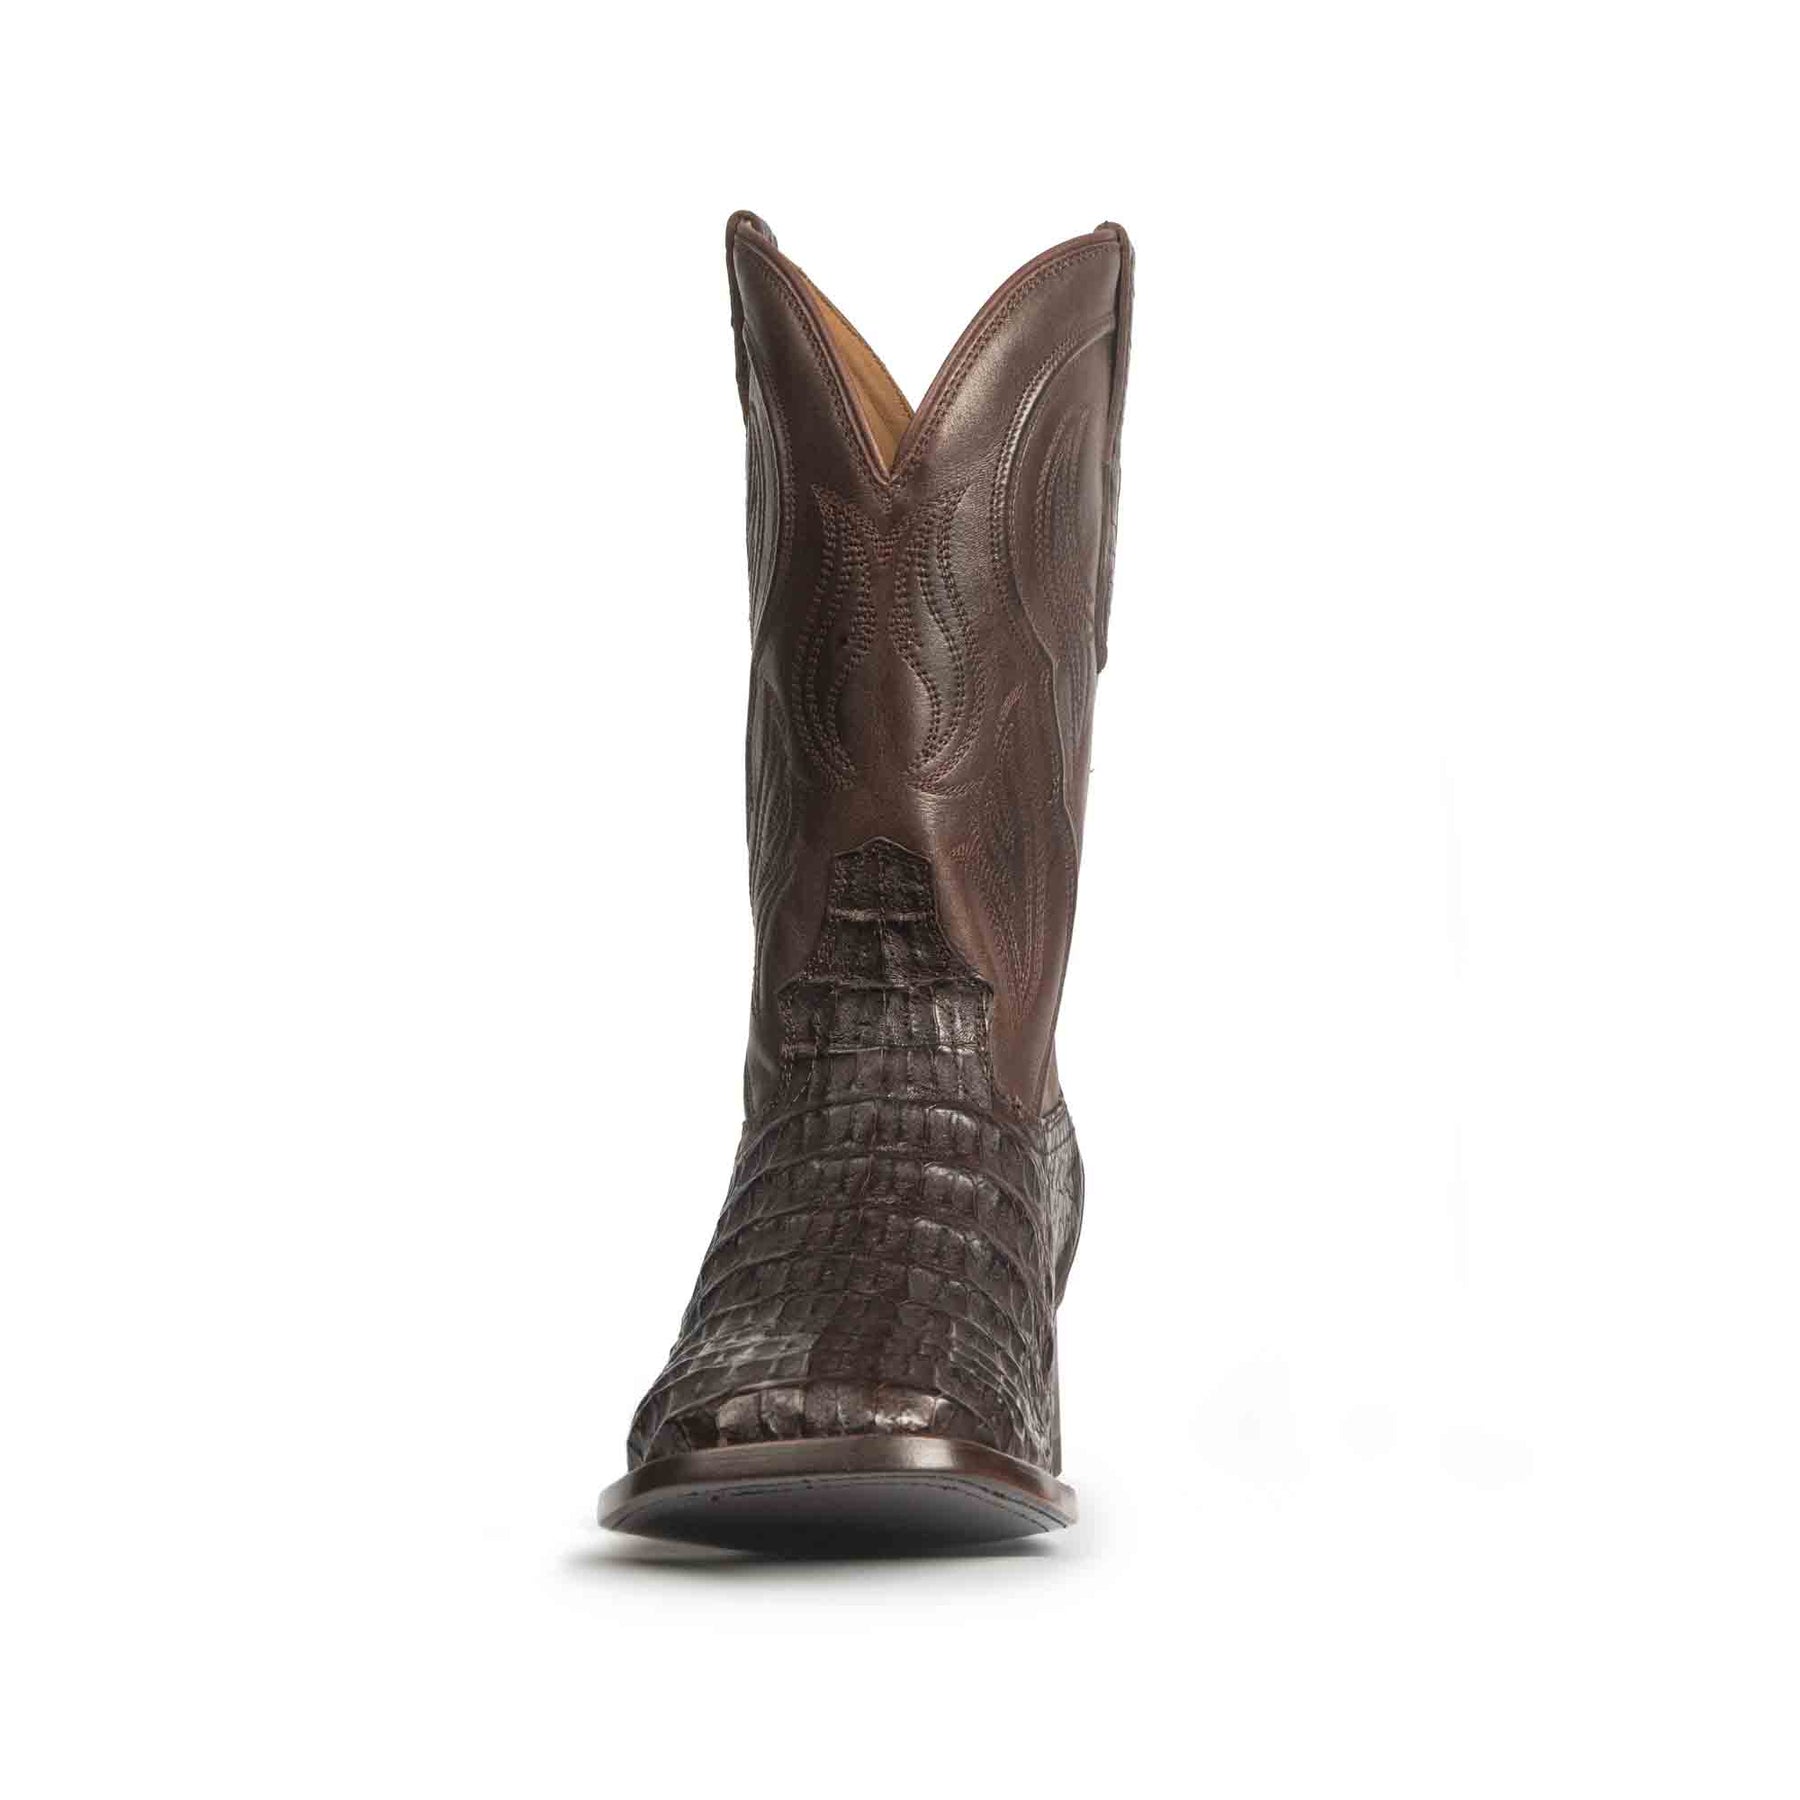 Men's Caiman Hornback Square-Toe Cowboy Boot by RUJO